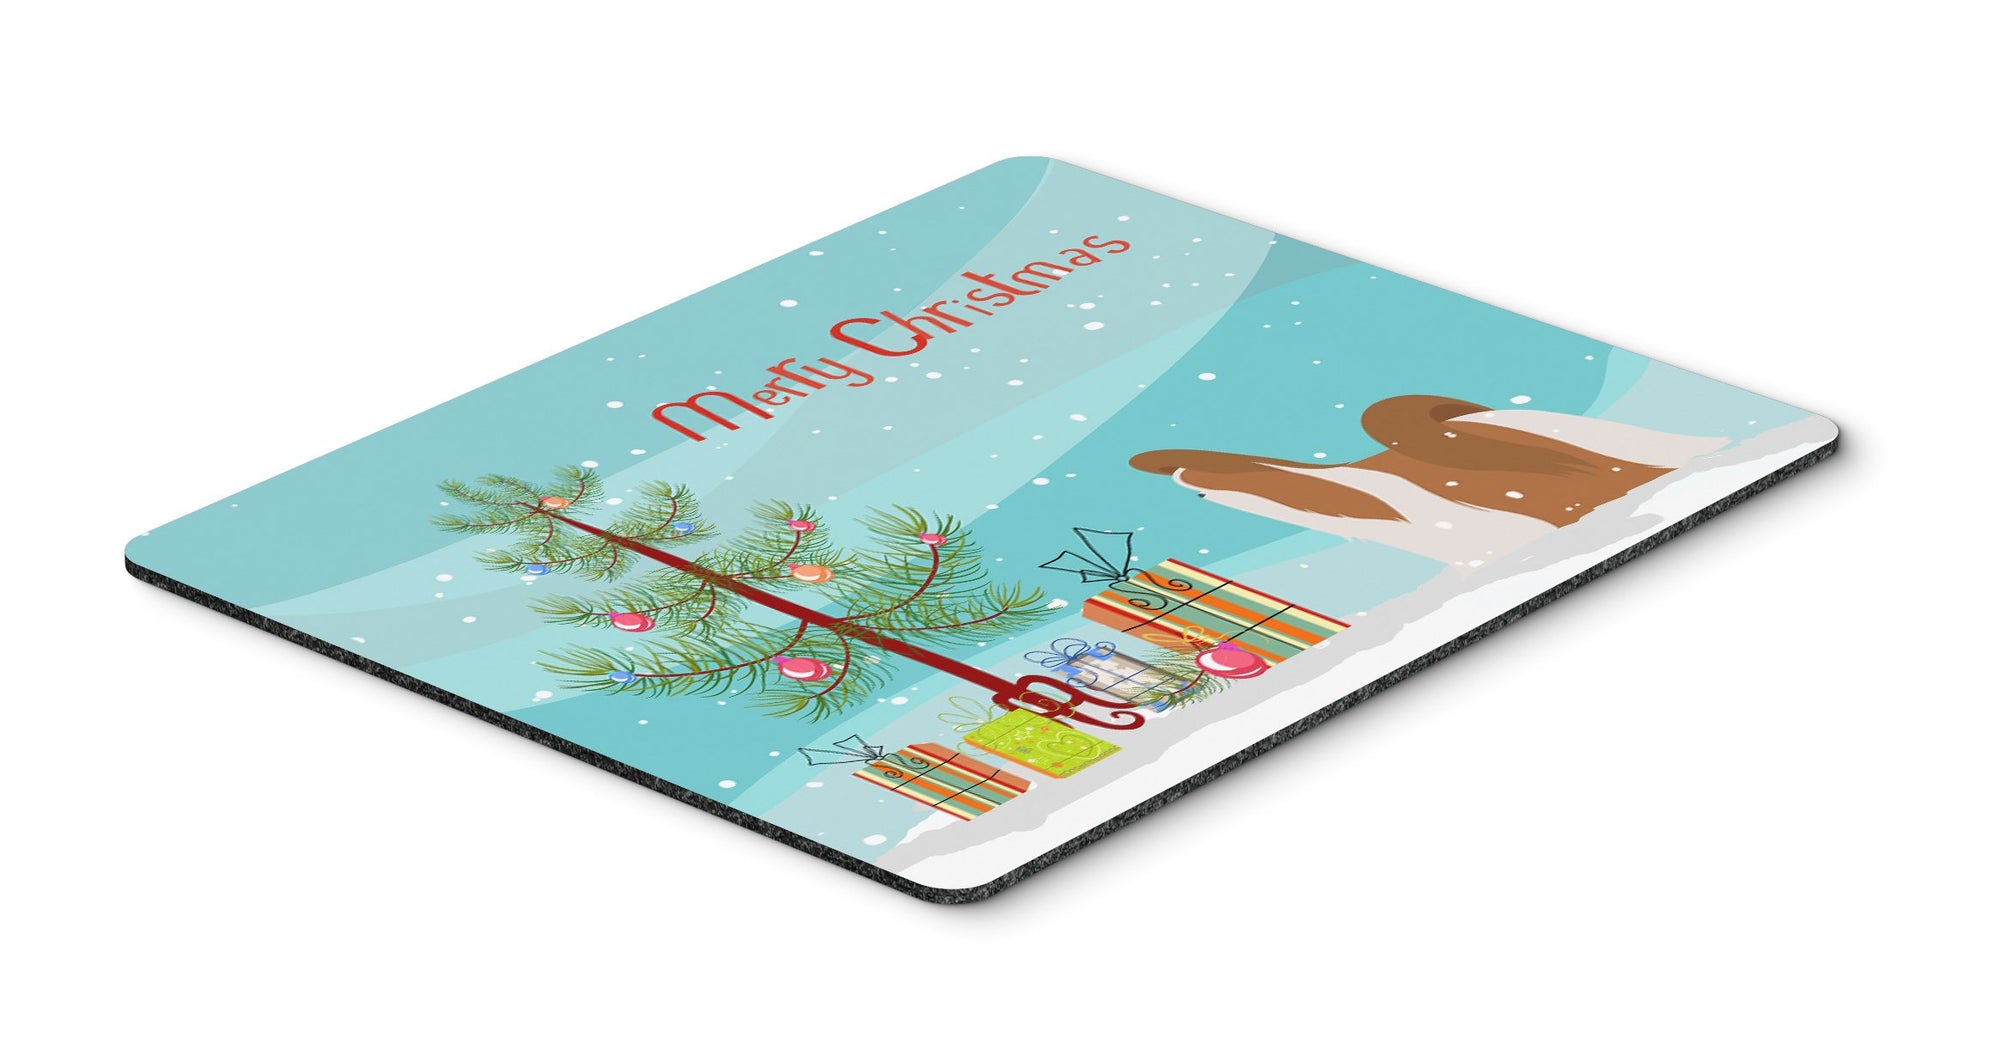 Shih Tzu Merry Christmas Tree Mouse Pad, Hot Pad or Trivet by Caroline's Treasures